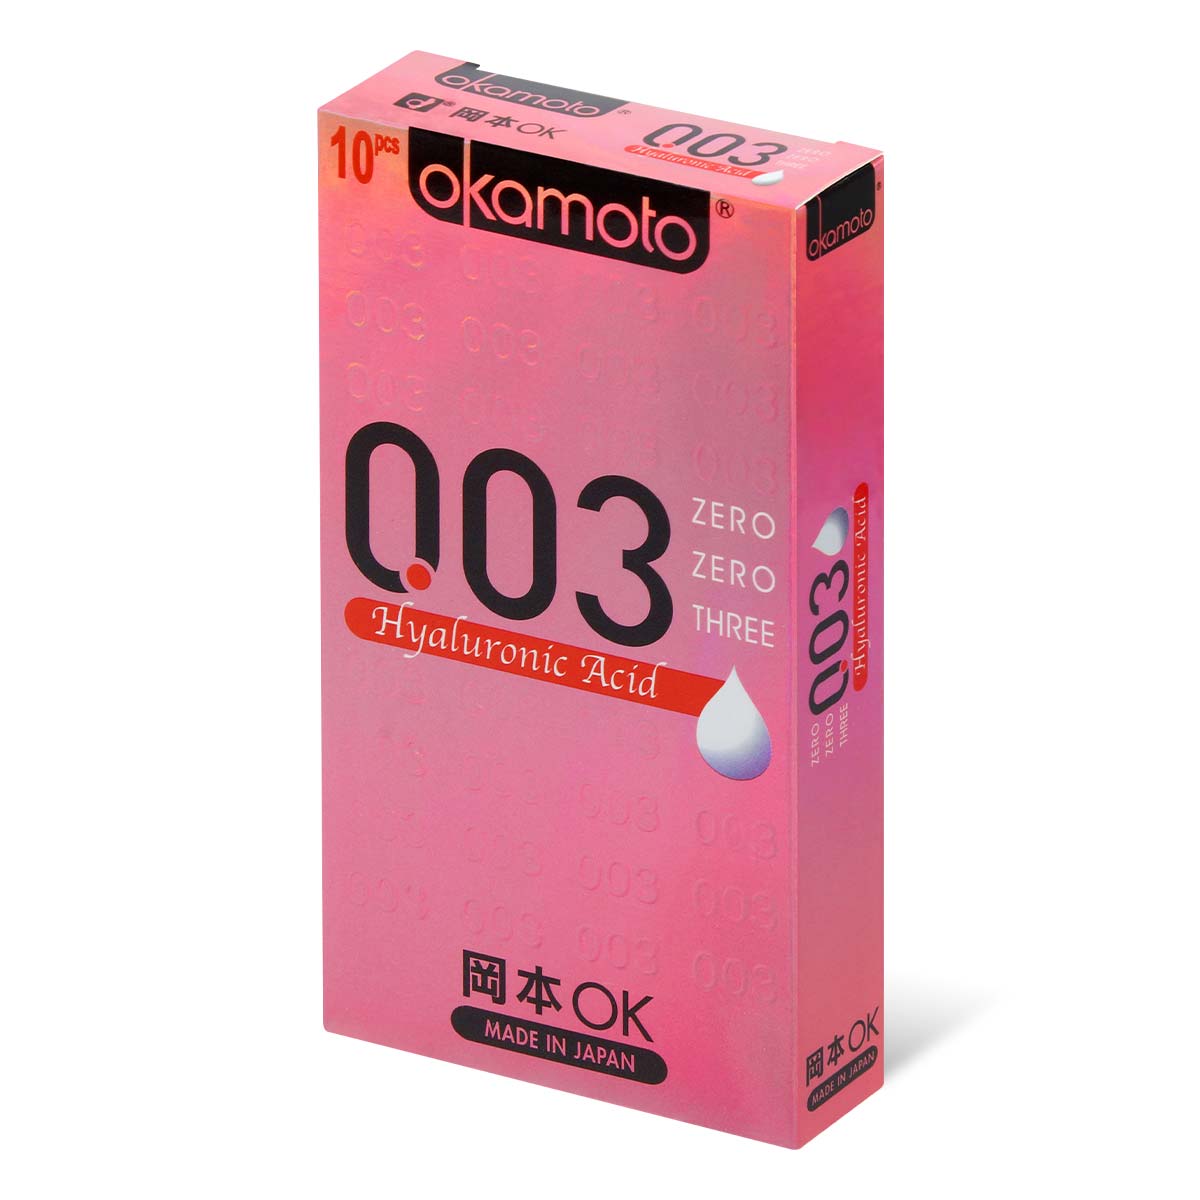 Okamoto 0.03 Hyaluronic Acid 10's Pack Latex Condom-p_1